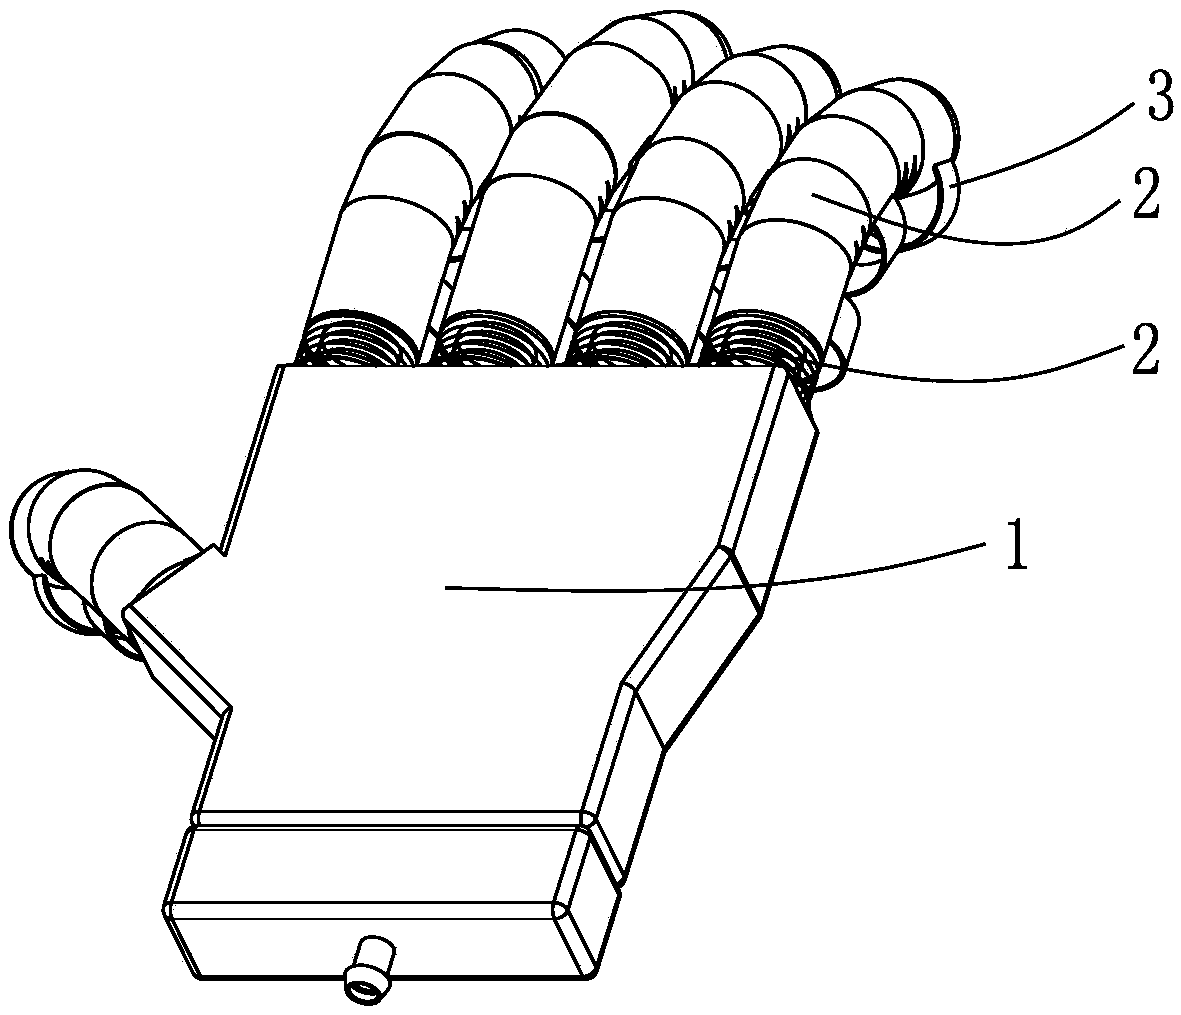 Human hand-imitated type rehabilitation manipulator